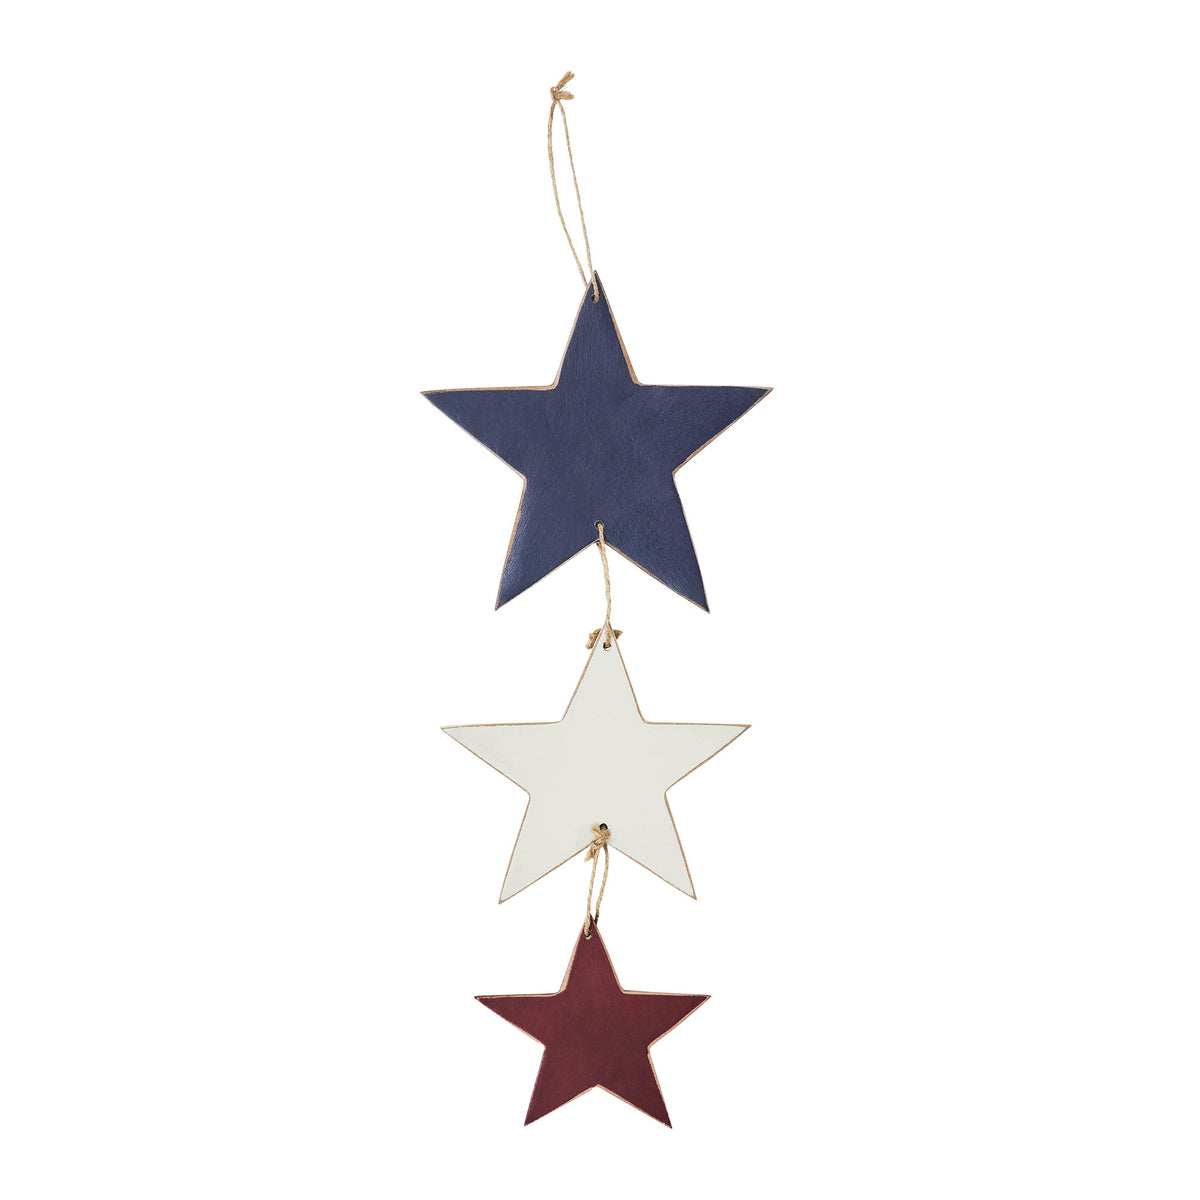 RWB Triple Hanging Stars Ornament 13.75x6